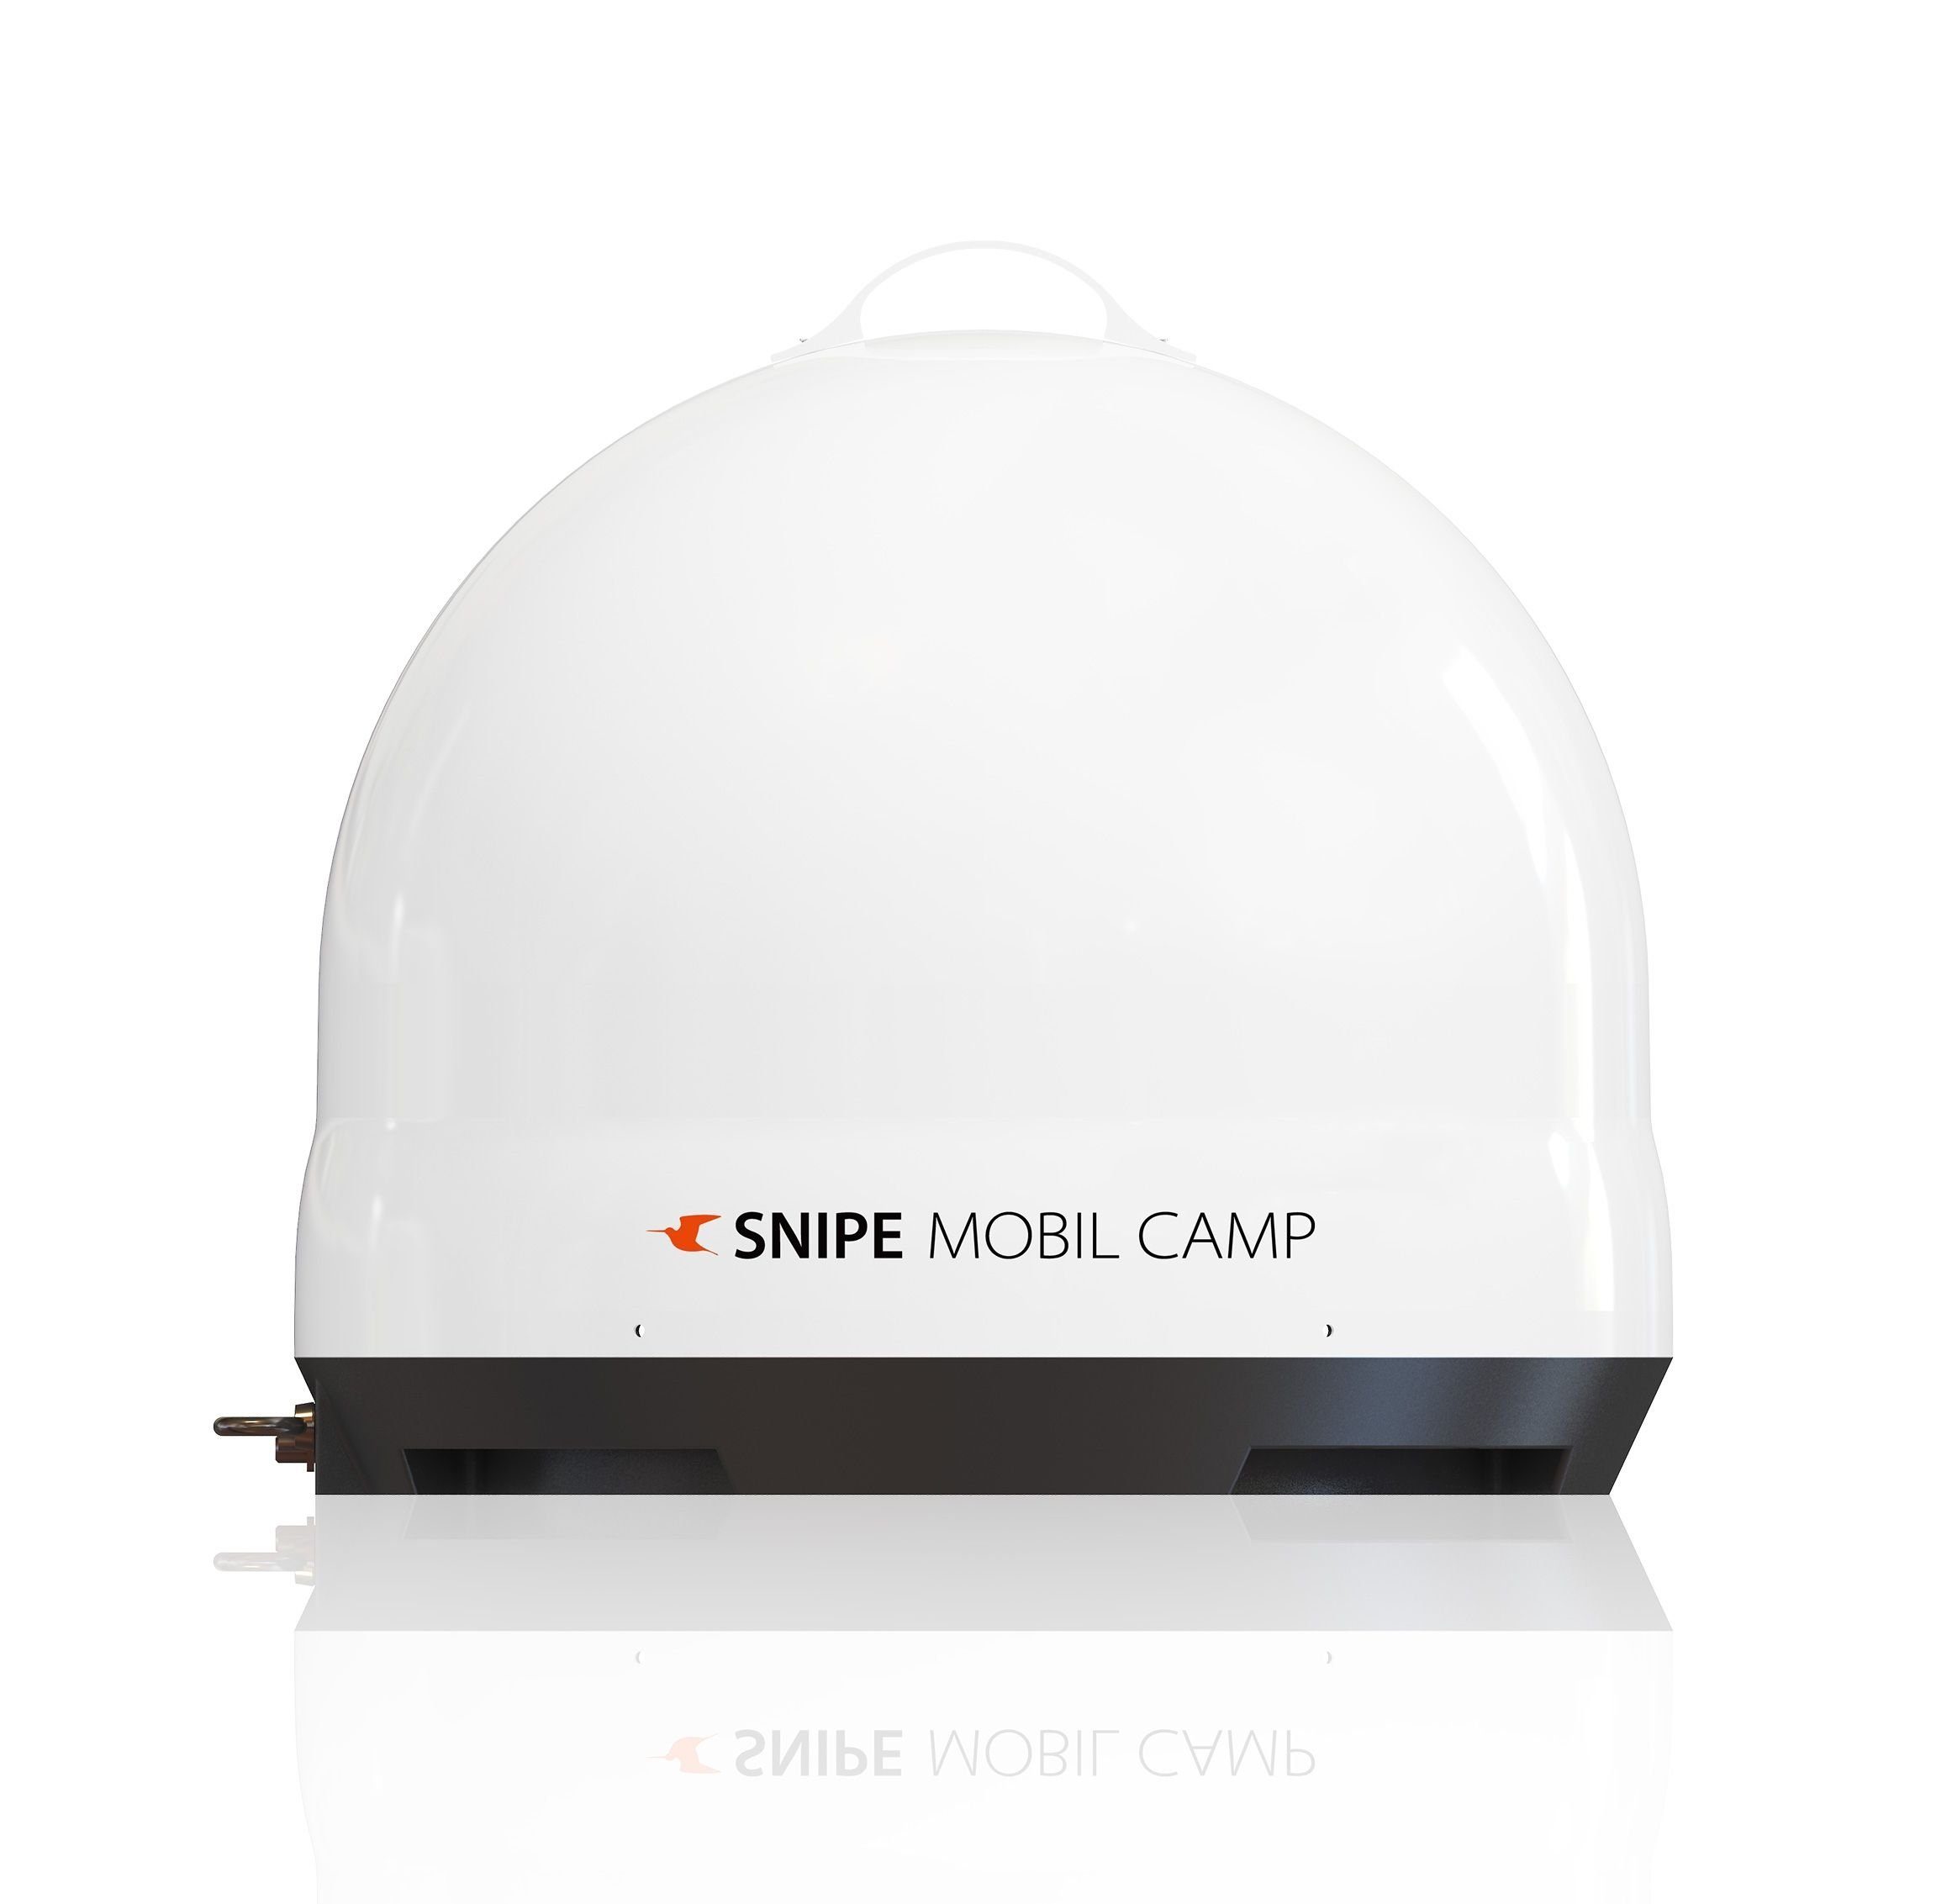 Selfsat Camp Camping Selfsat Antenne Sat-Anlage Snipe Mobil Vollautomatische Camping - Single